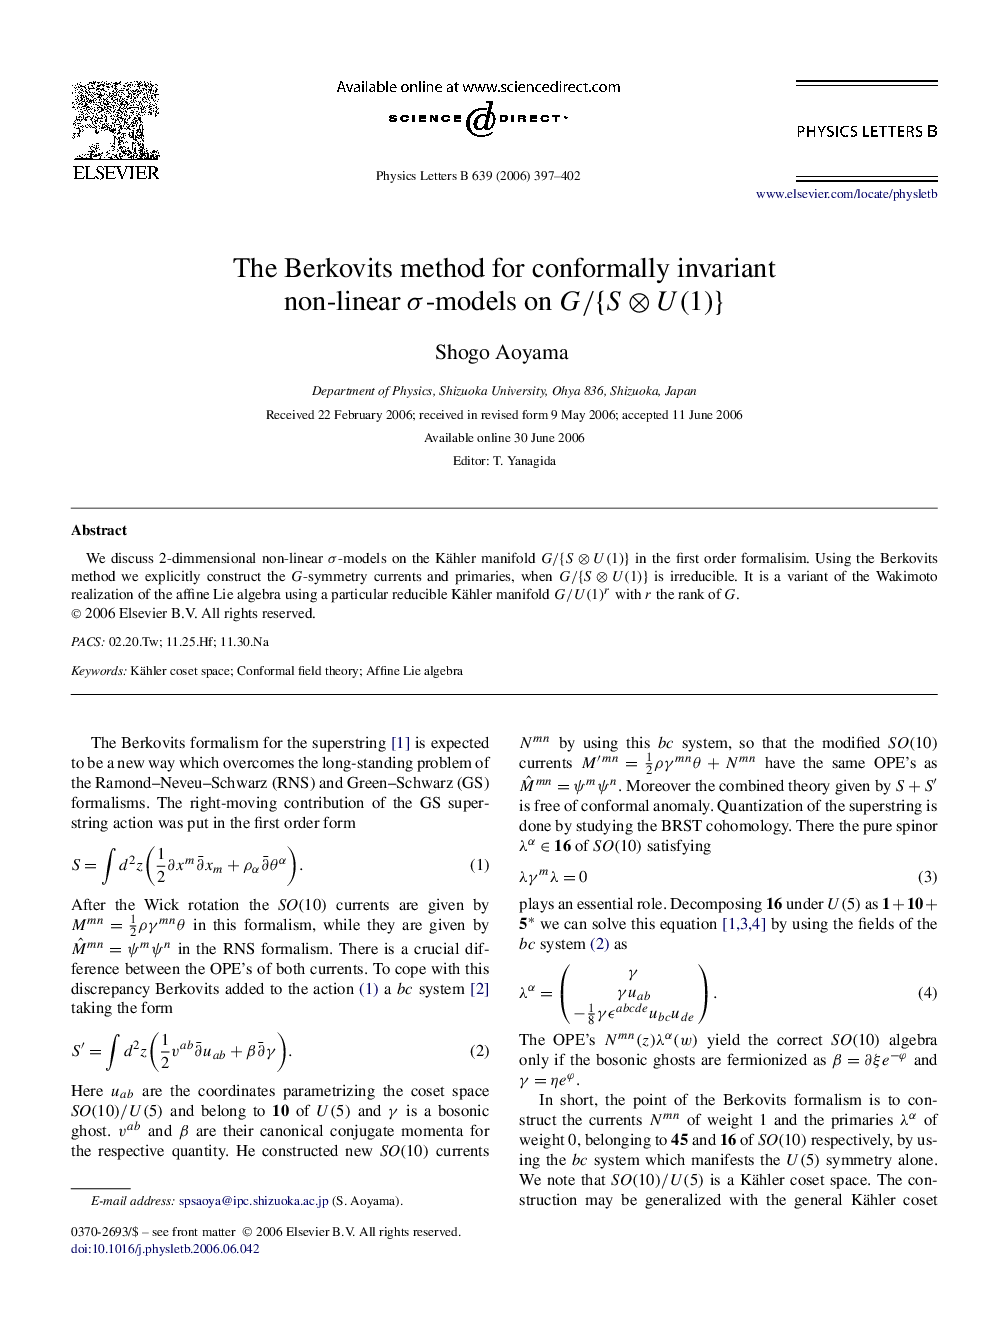 The Berkovits method for conformally invariant non-linear Ï-models on G/{SâU(1)}